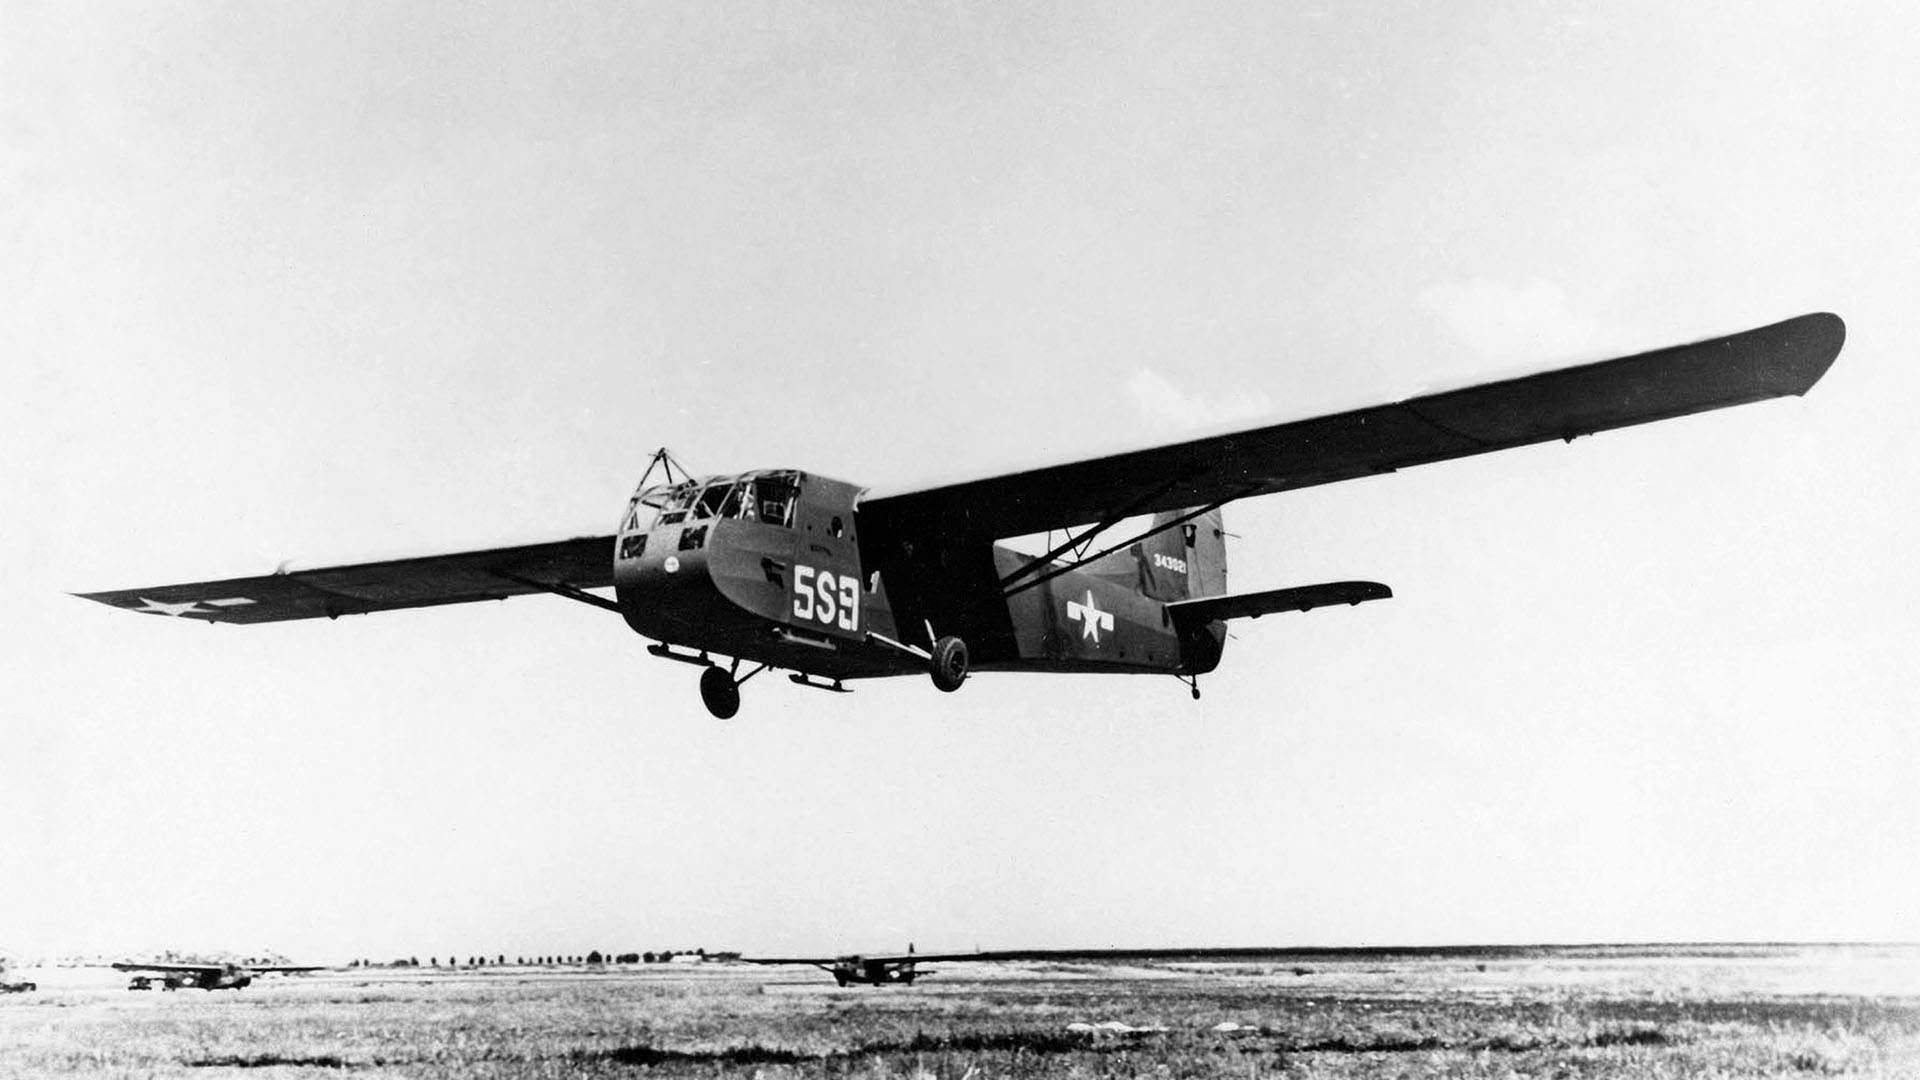 The U.S. Army Air Force Wace CG-4A glider.